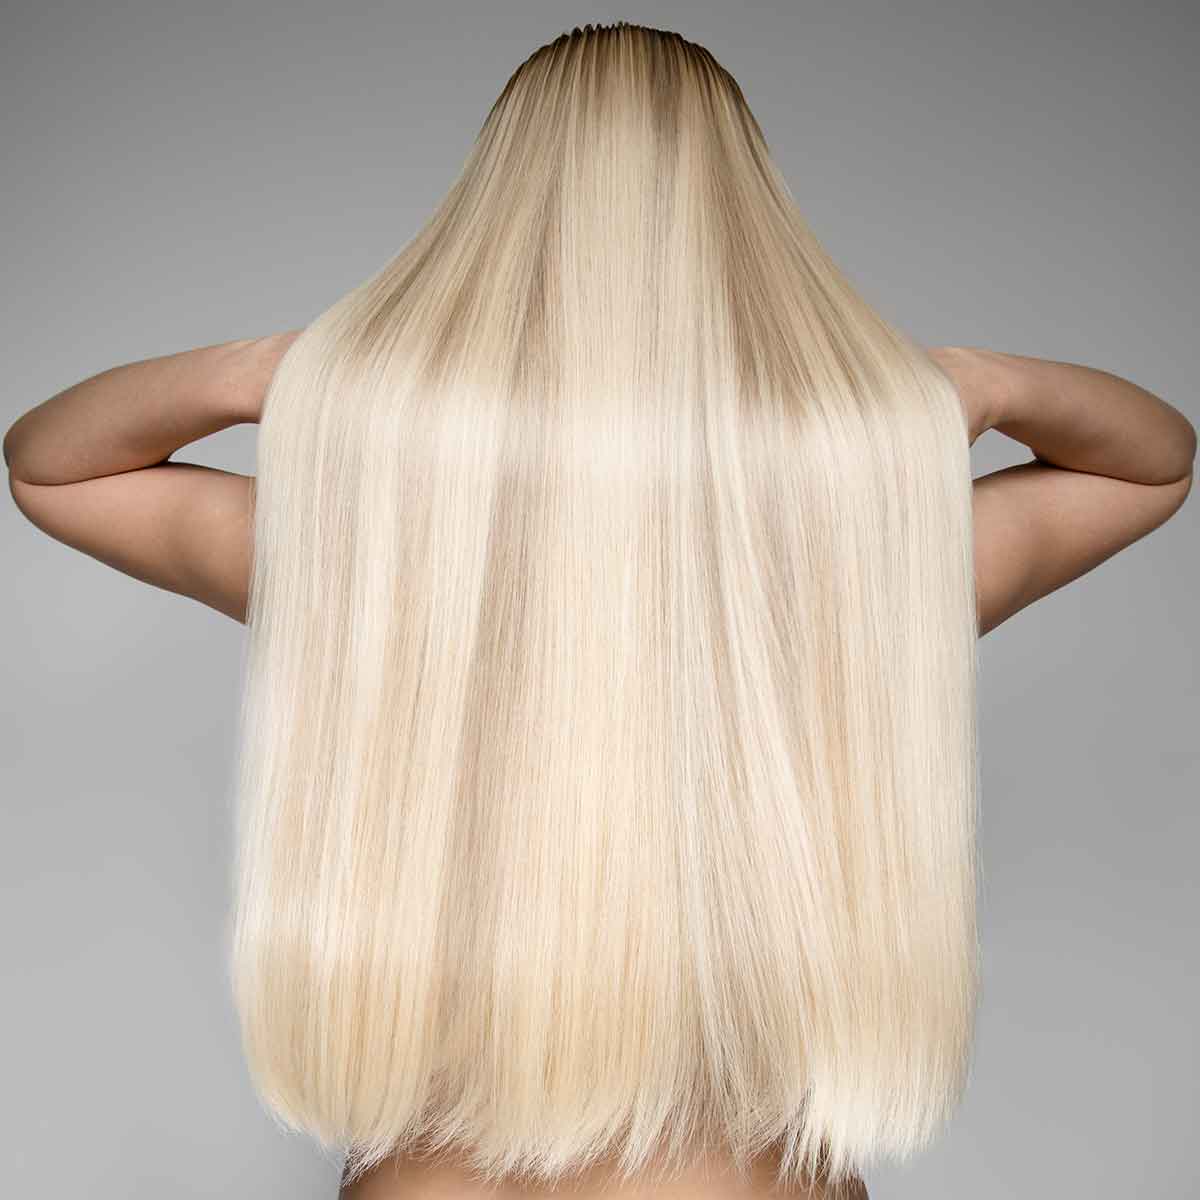 Ariabeauty Hair Straightener - Hair Iron Bestselling 1” Rose Gold Infrared Ceramic Hair Straightener